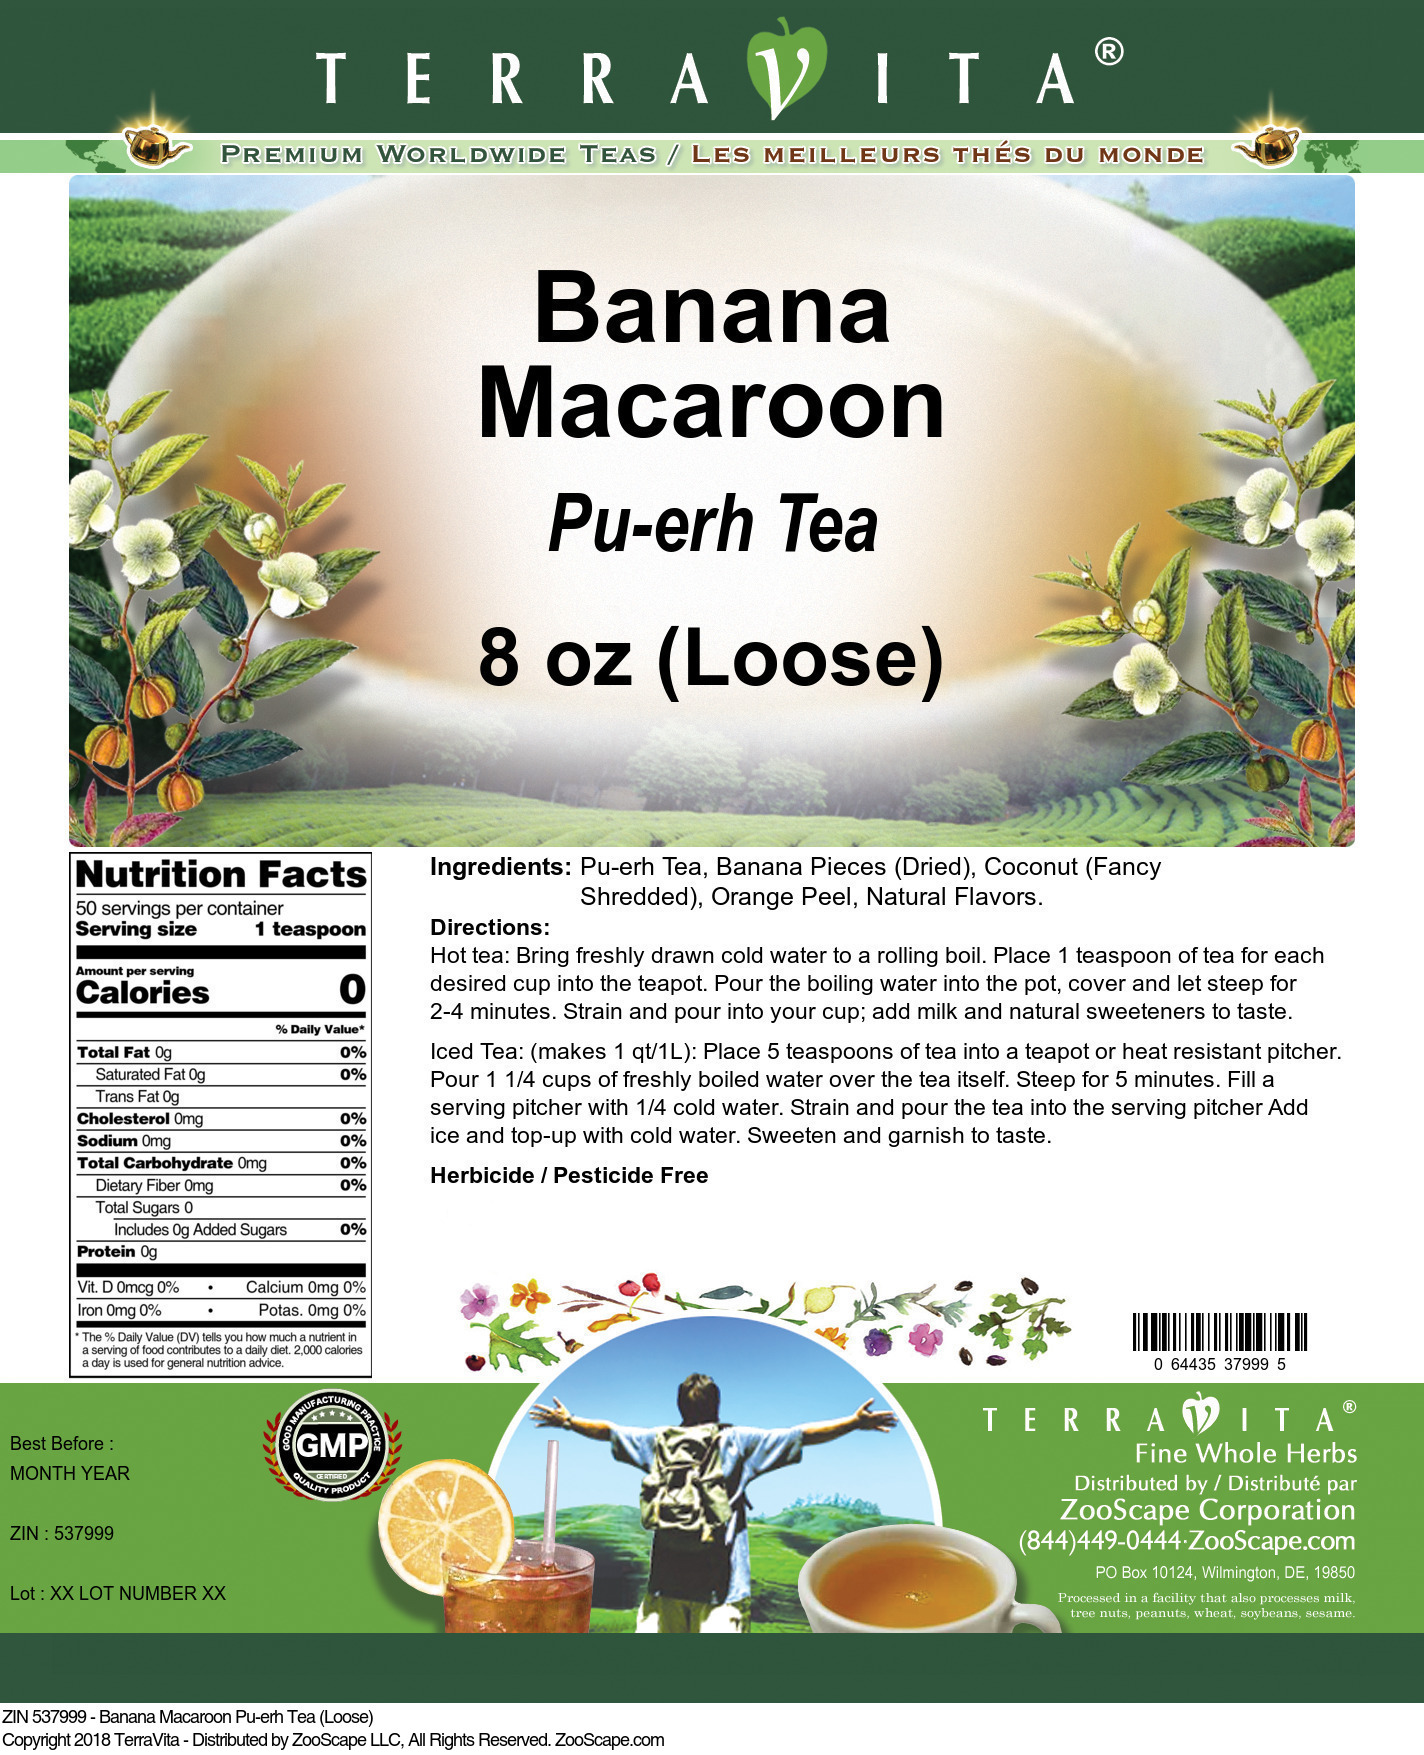 Banana Macaroon Pu-erh Tea (Loose) - Label